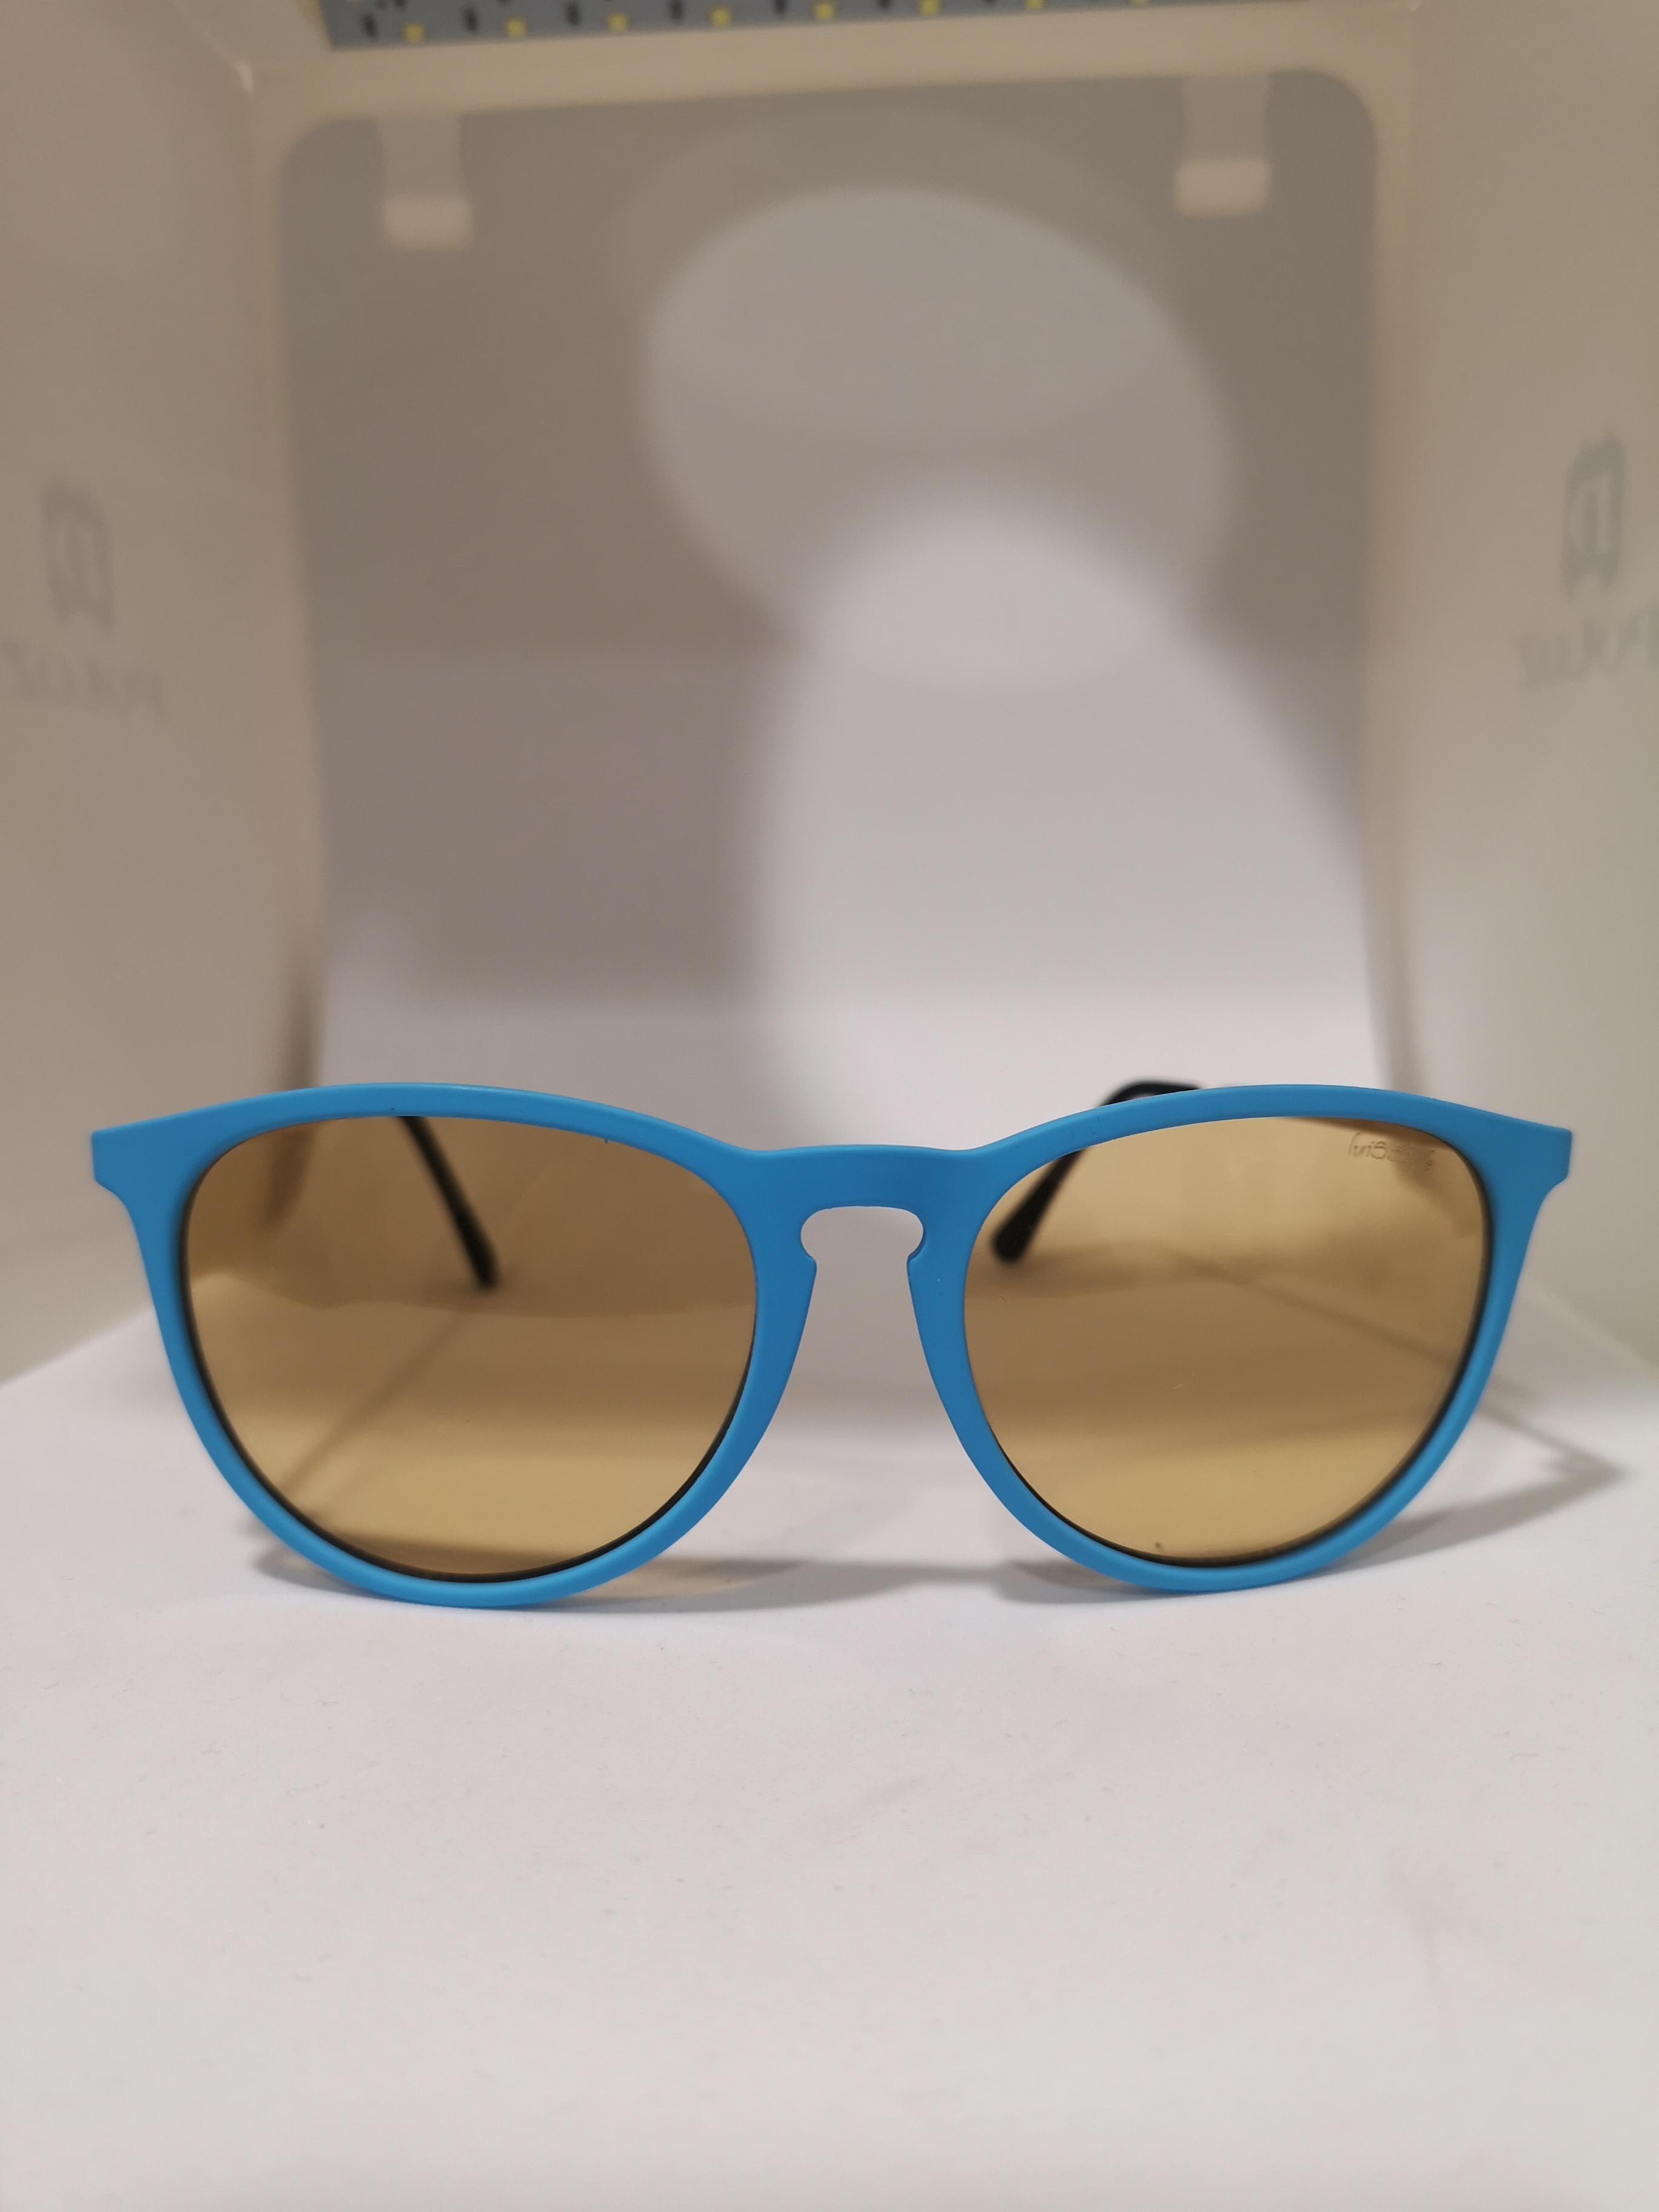 Luisstyle blue light orange lens sunglasses NWOT 1